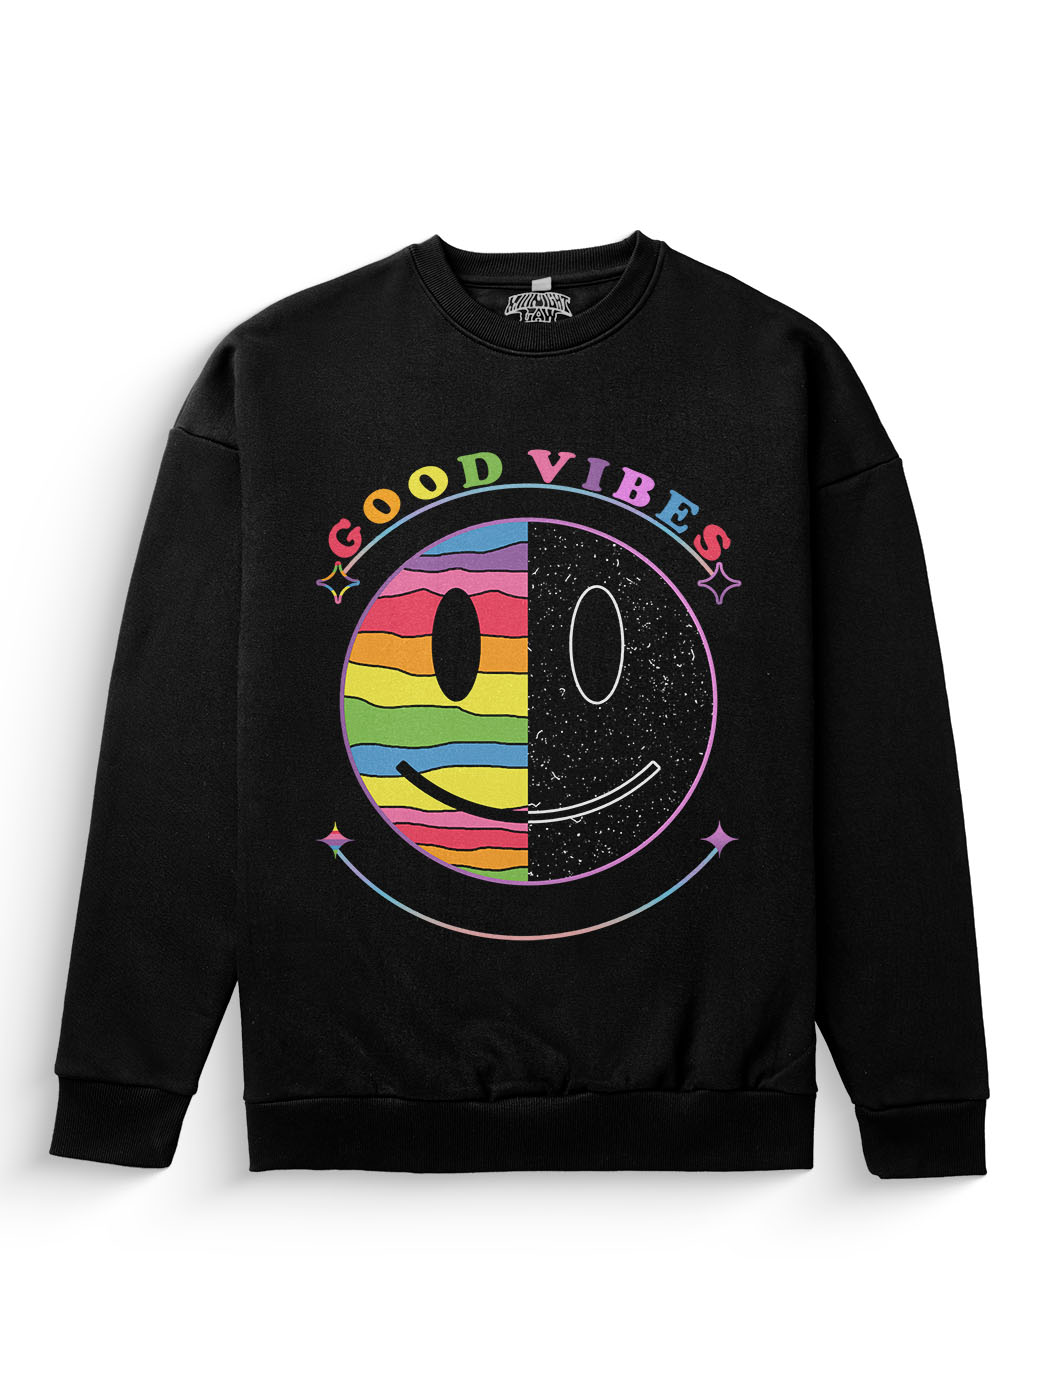 Good Vibes Sweatshirt - SALE